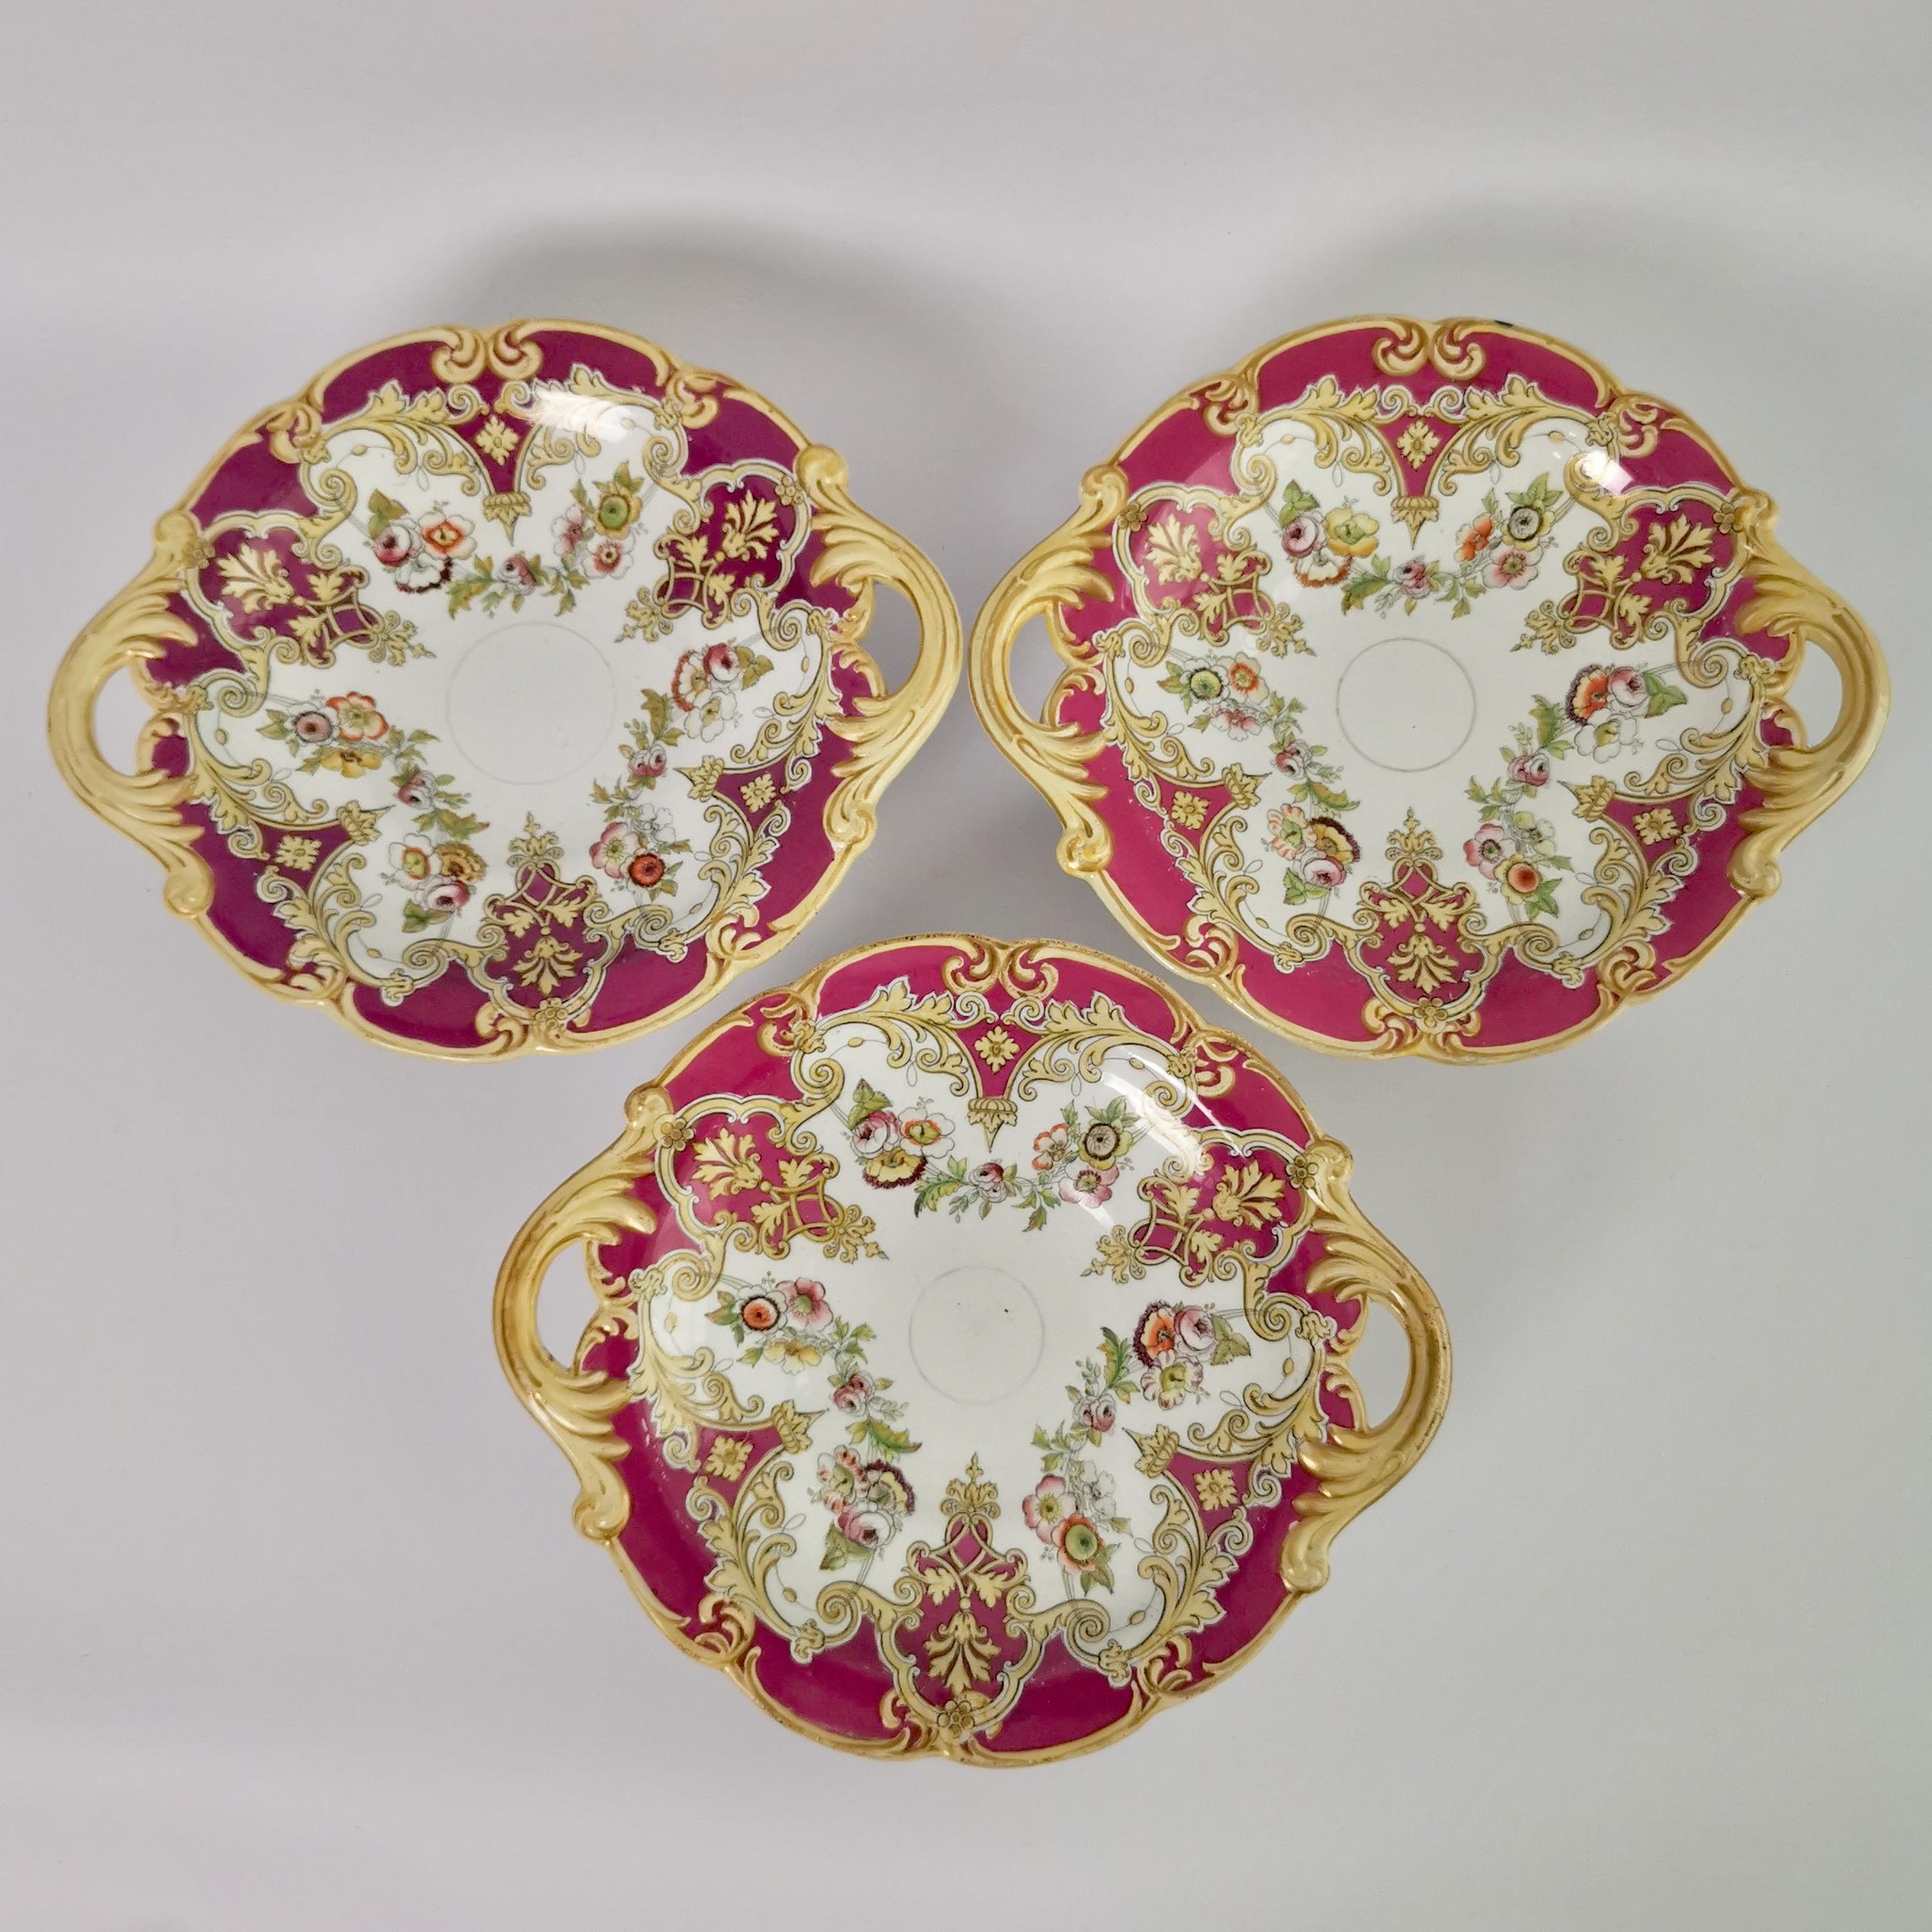 Hand-Painted Ridgway Earthenware Dessert Service, Fuchsia Pink, Floral Festoons, ca 1870